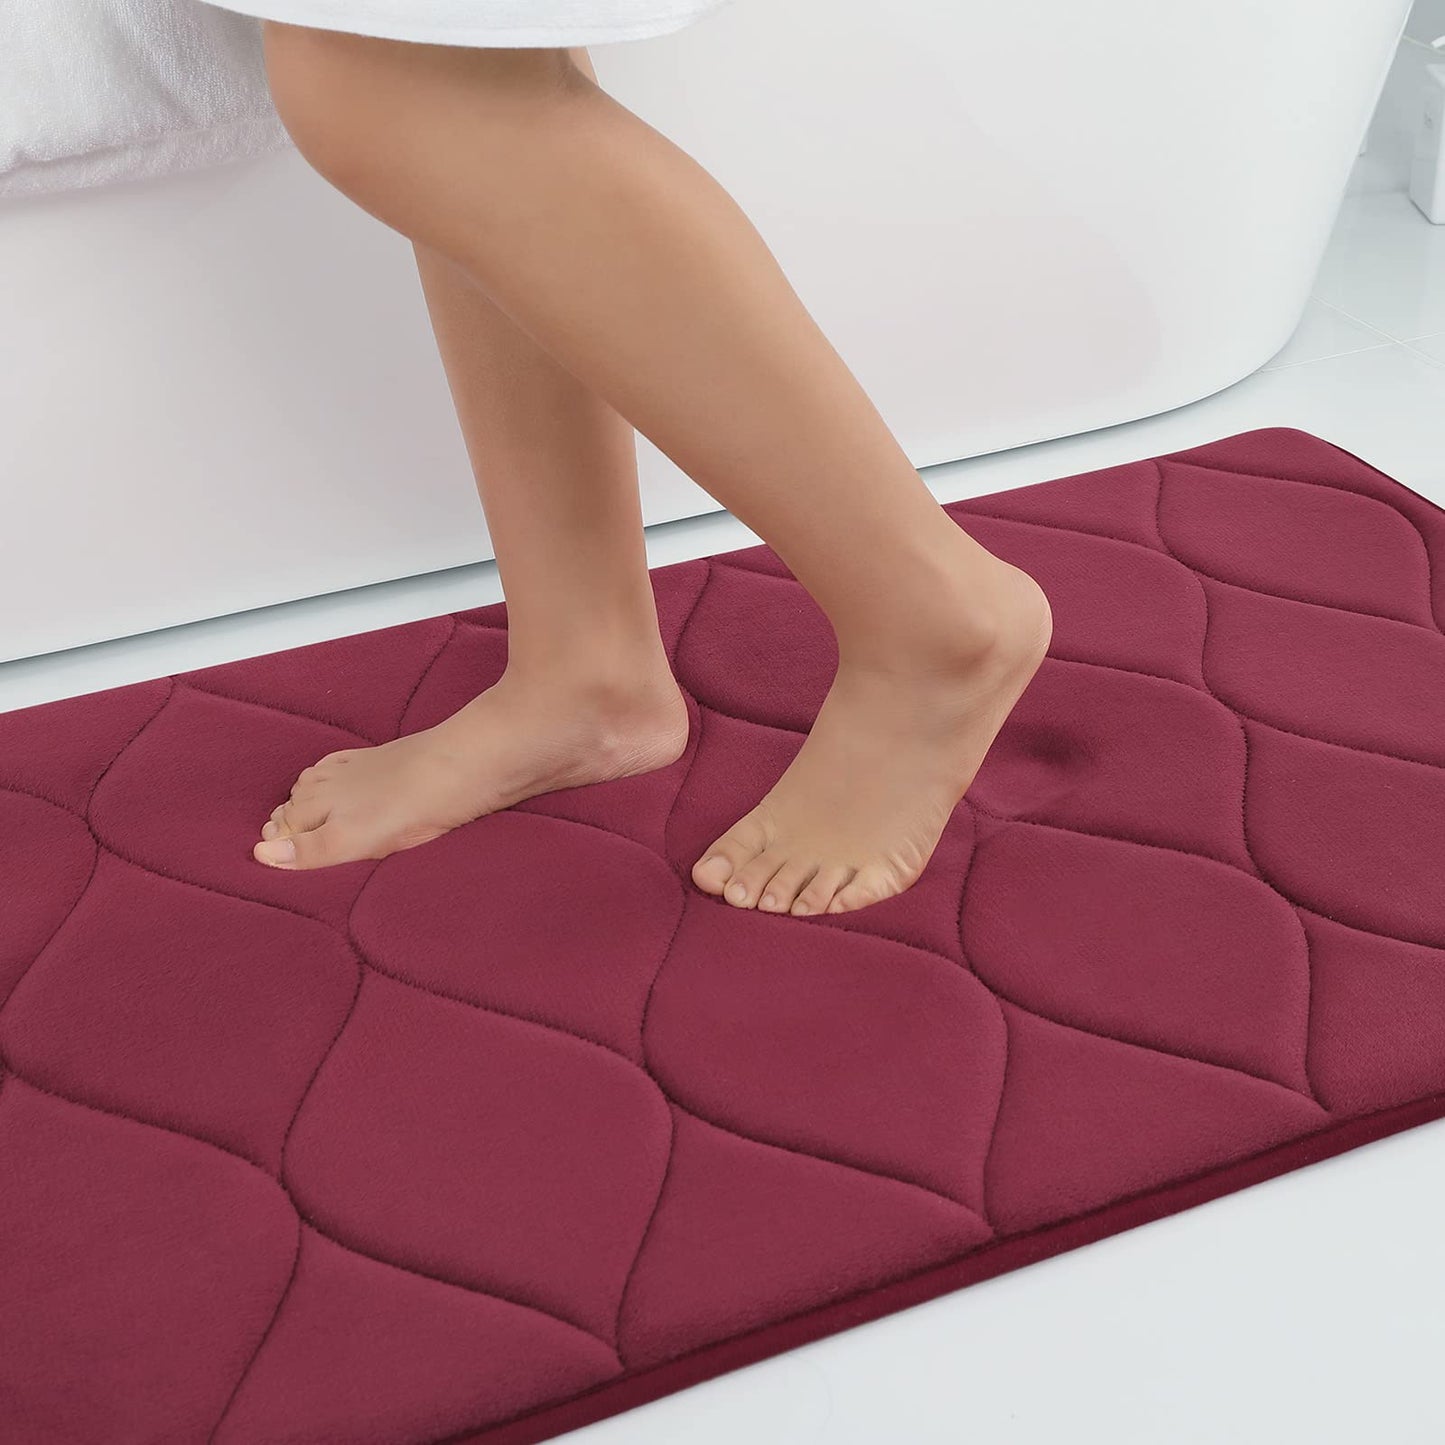 Memory Foam Bath Mat Anti-Slip Shower Carpet Soft Foot Pad Decoration Floor Protector Absorbent Quick Dry Bathroom Rug Mats & Rugs DailyAlertDeals 43x61cm(17x24inch) China wine red 1